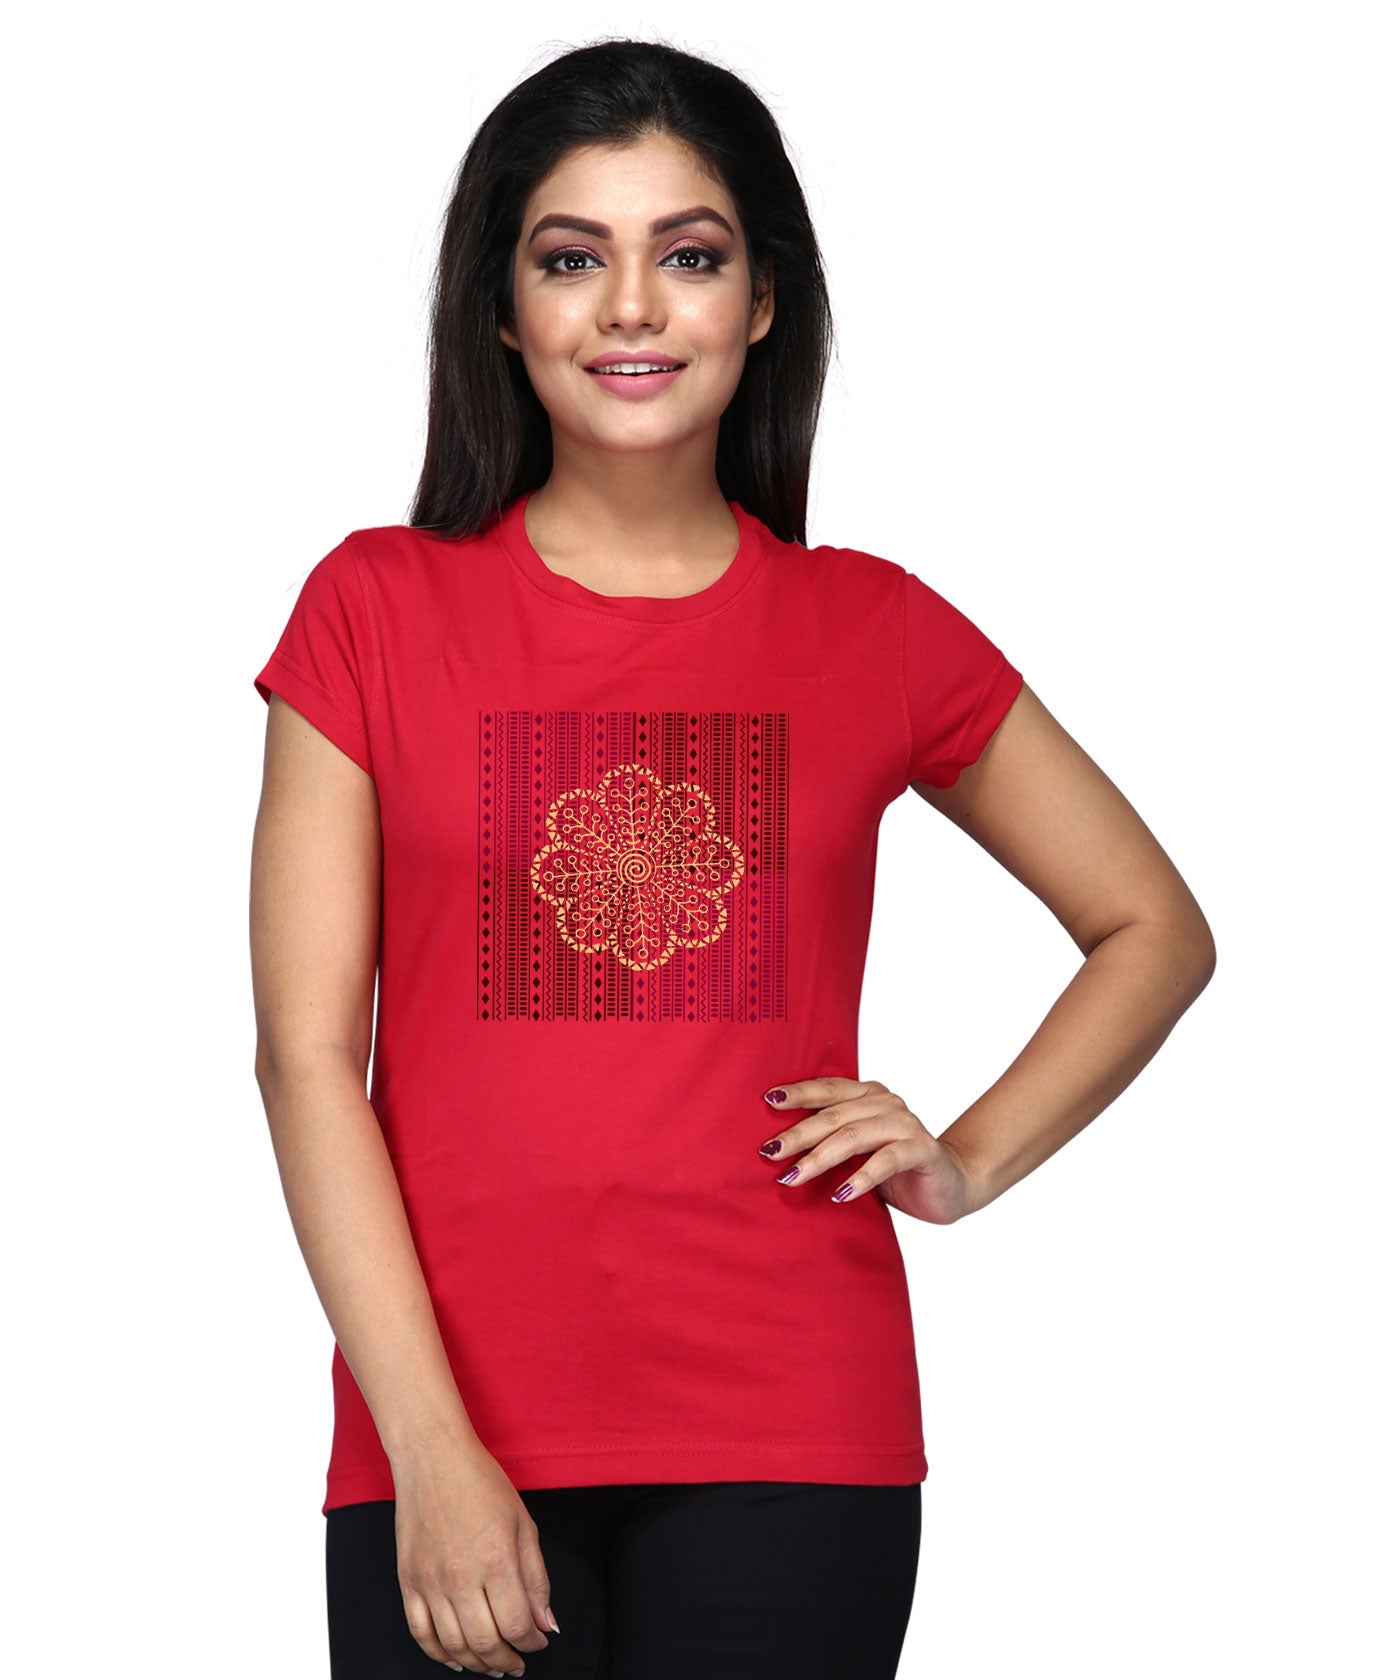 Centre Flower - Block Print Tees for Women - Red